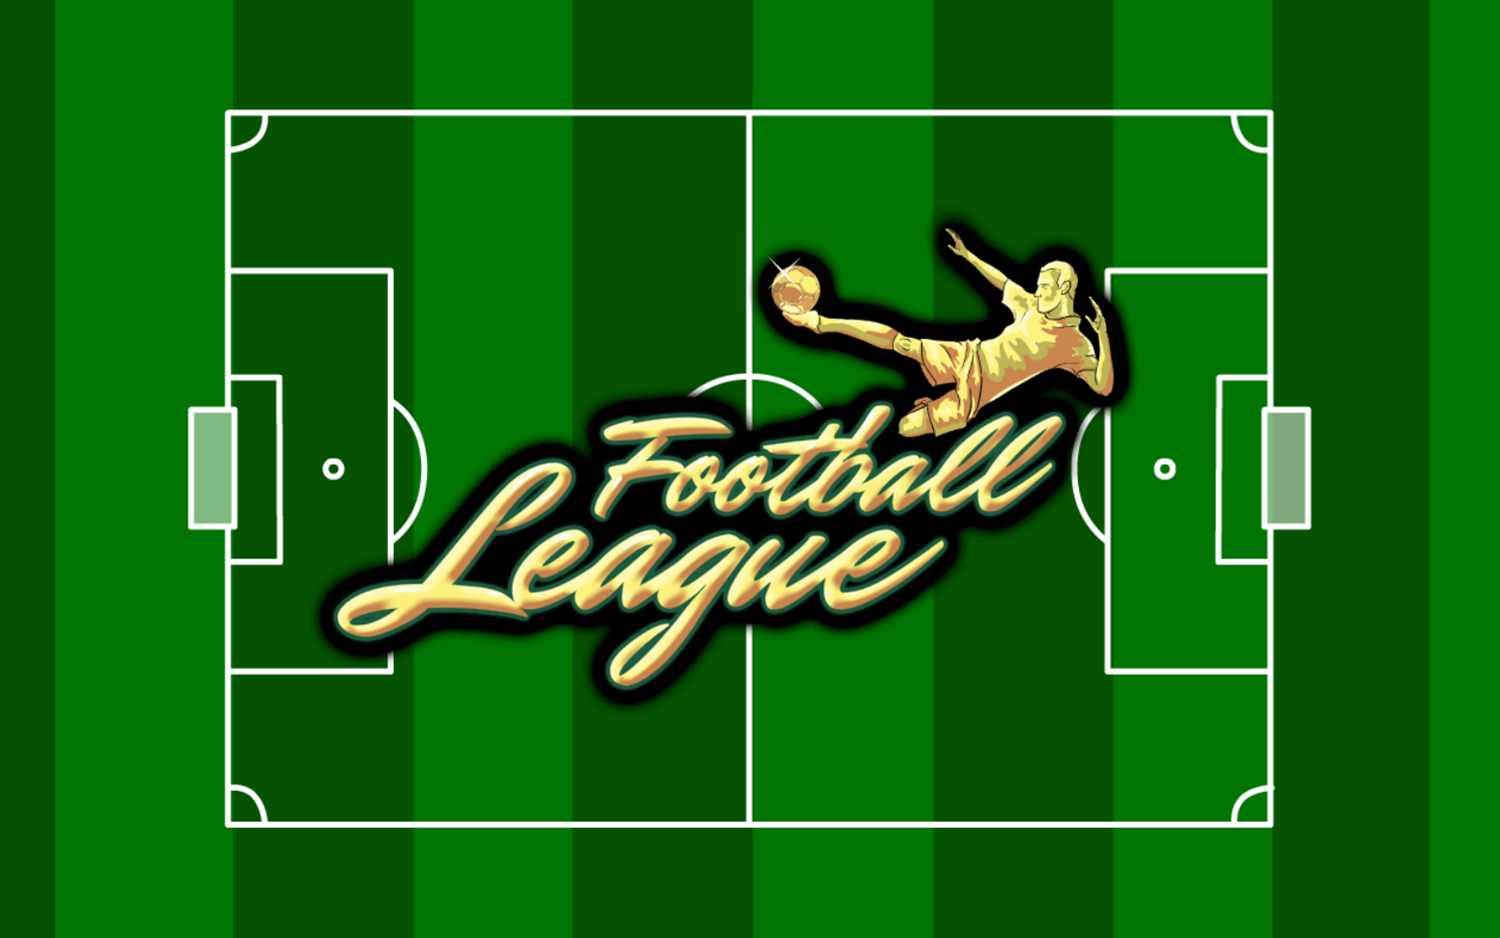 Football League Slot Machine Game Welcome Screen Screenshot.